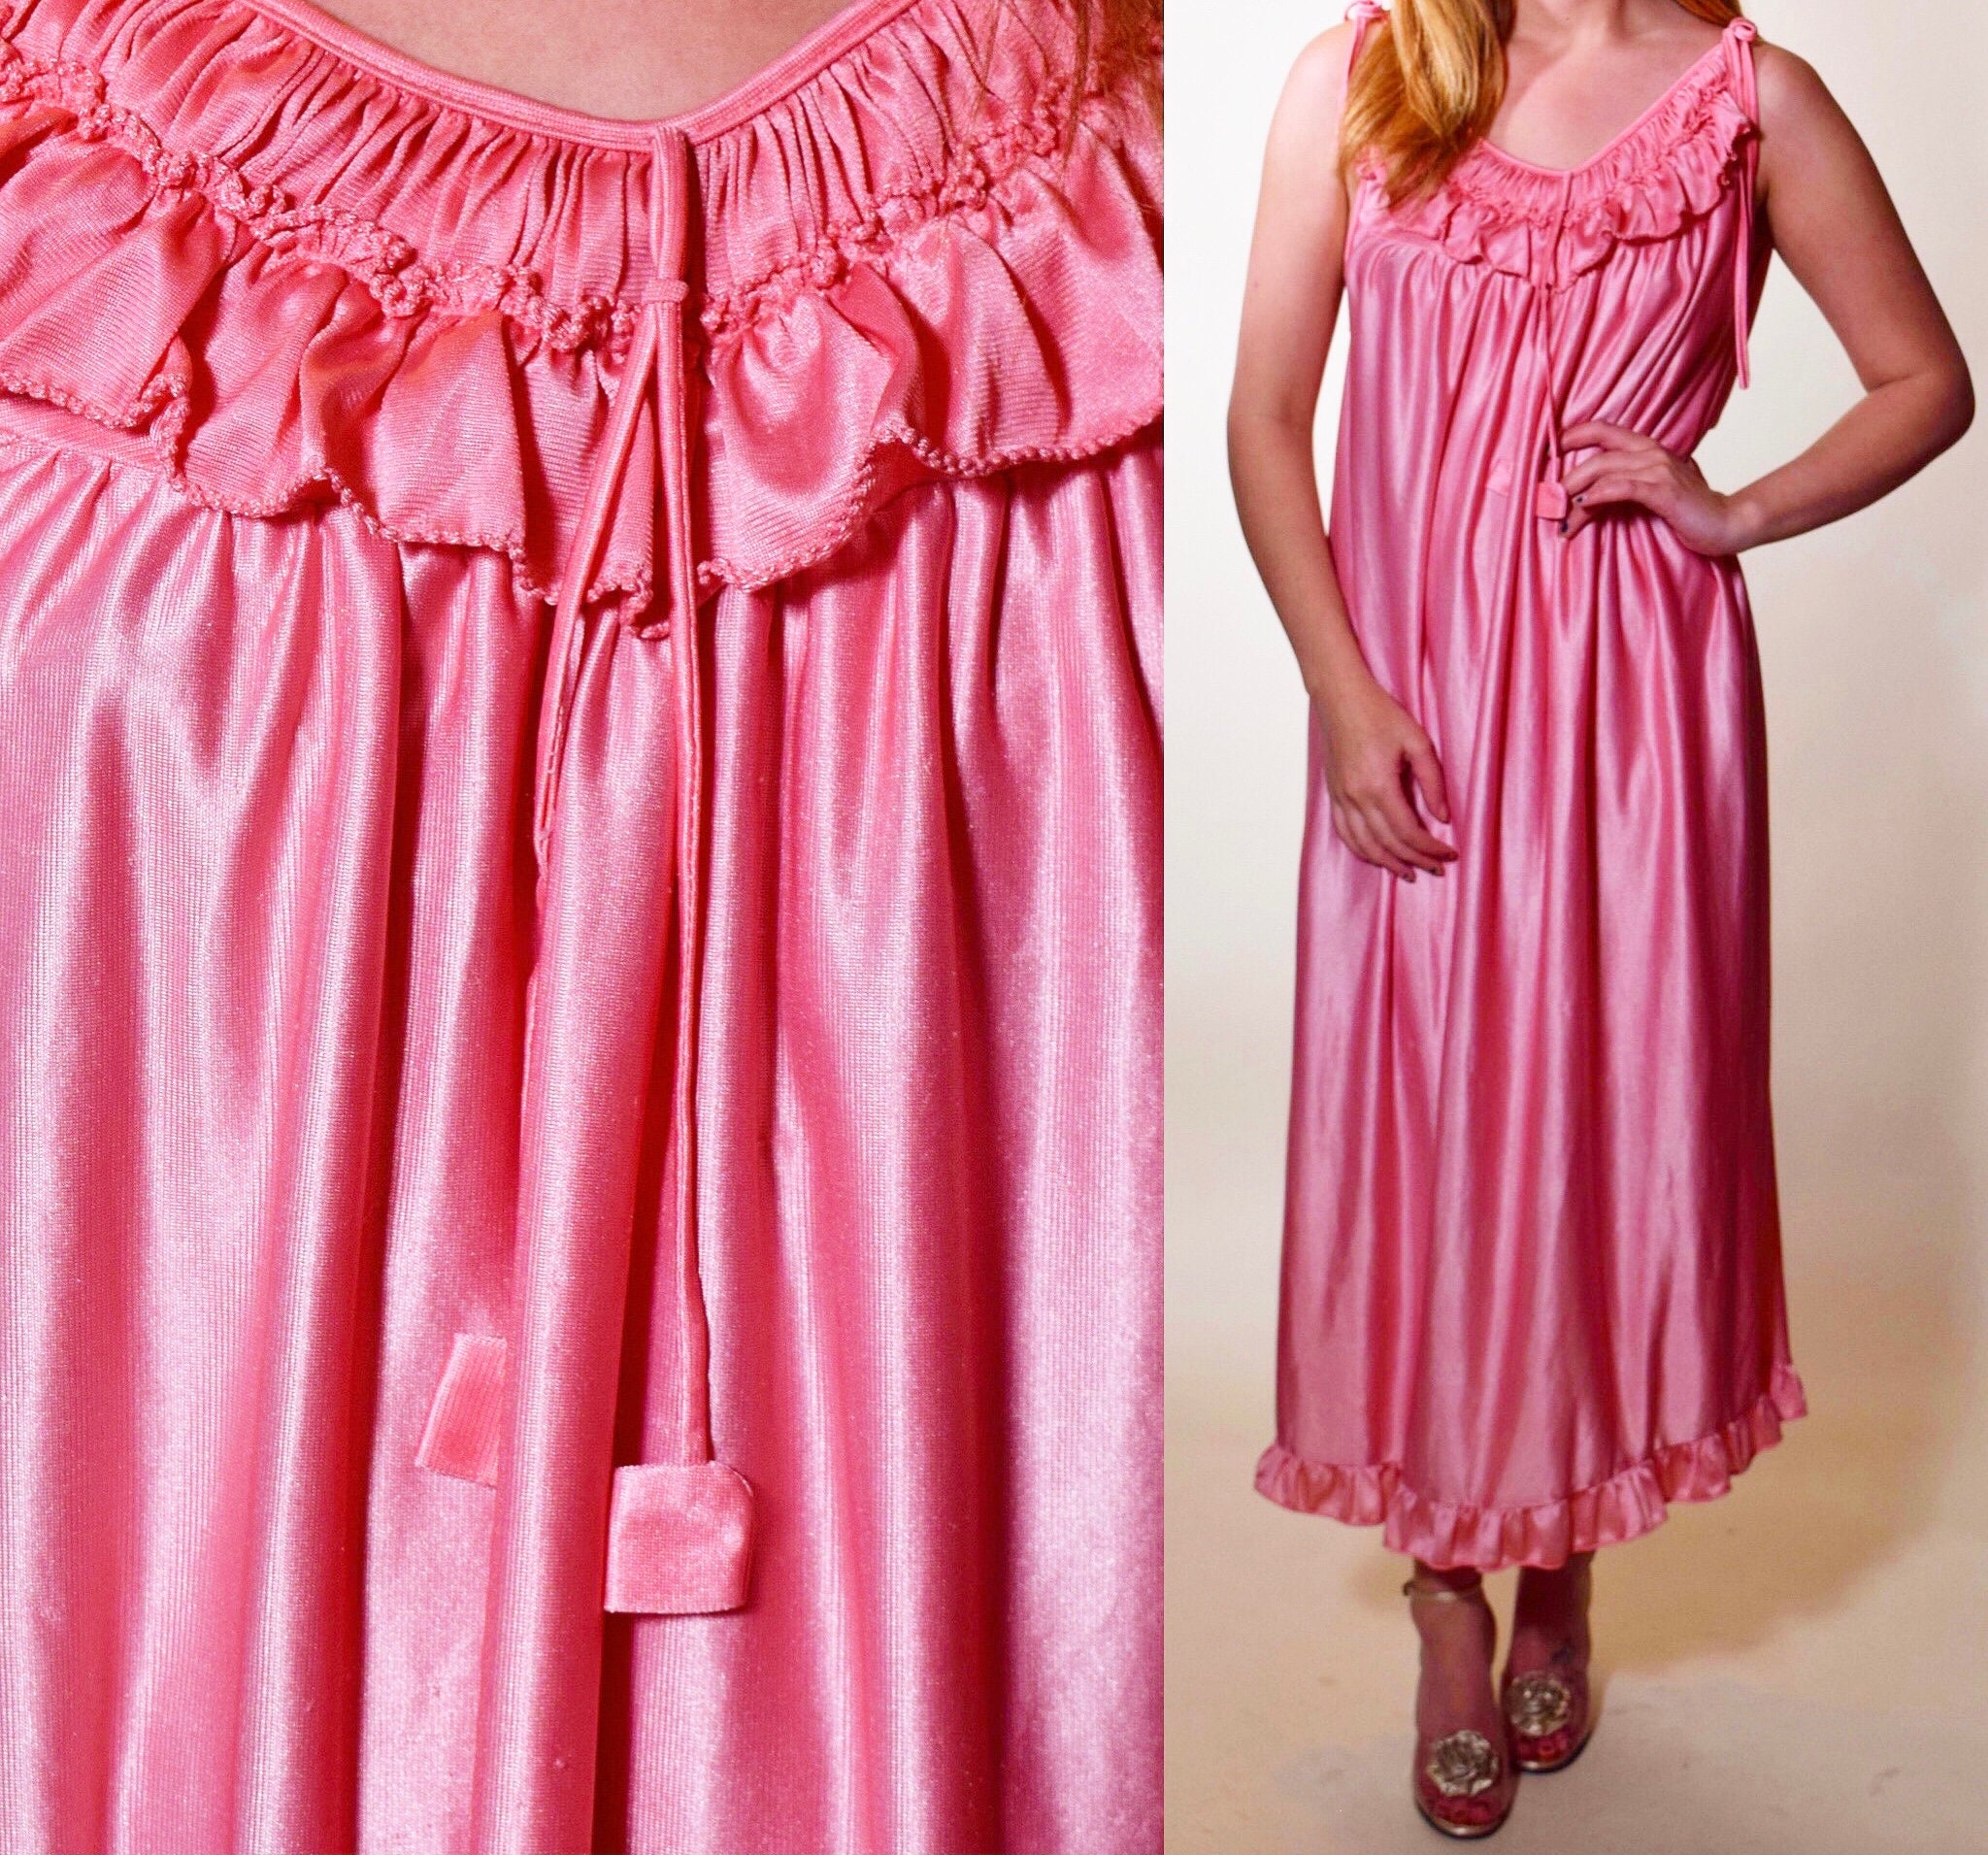 Authentic vintage pink nylon sleeveless spaghetti strap baby doll ...